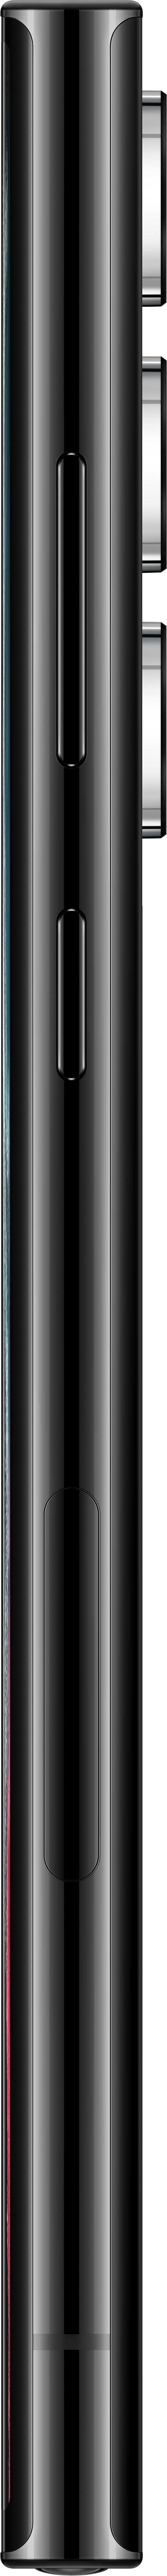 Samsung - Galaxy S22 Ultra 128GB (Unlocked) - Phantom Black_5